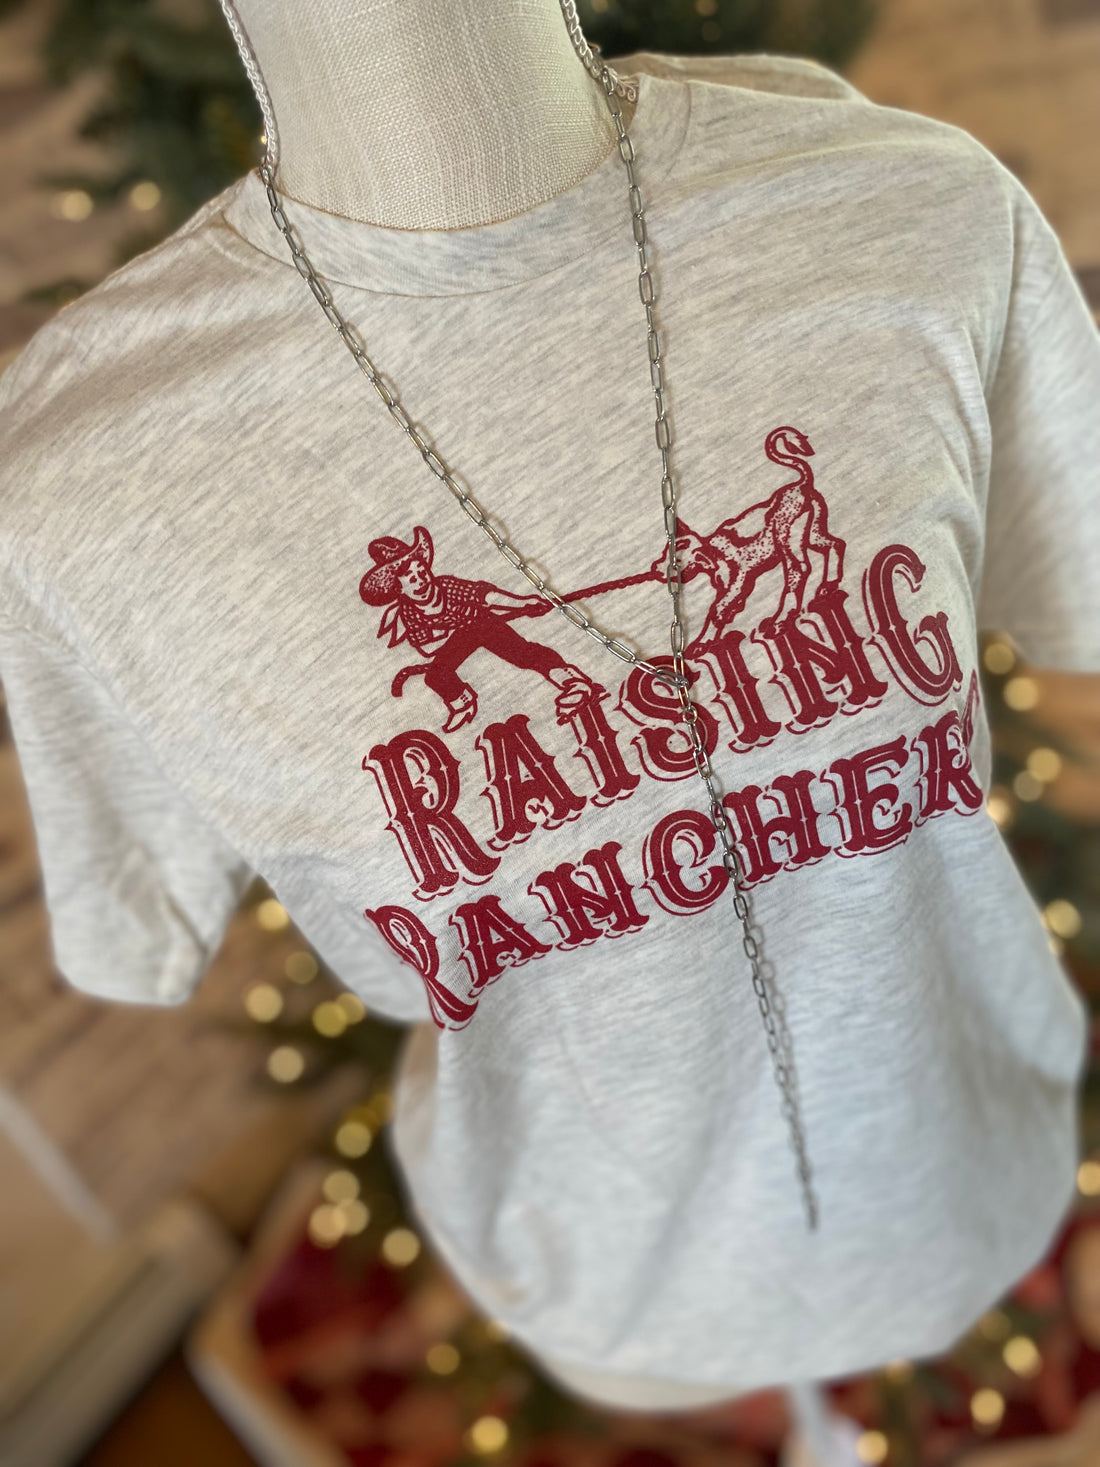 Raising Ranchers